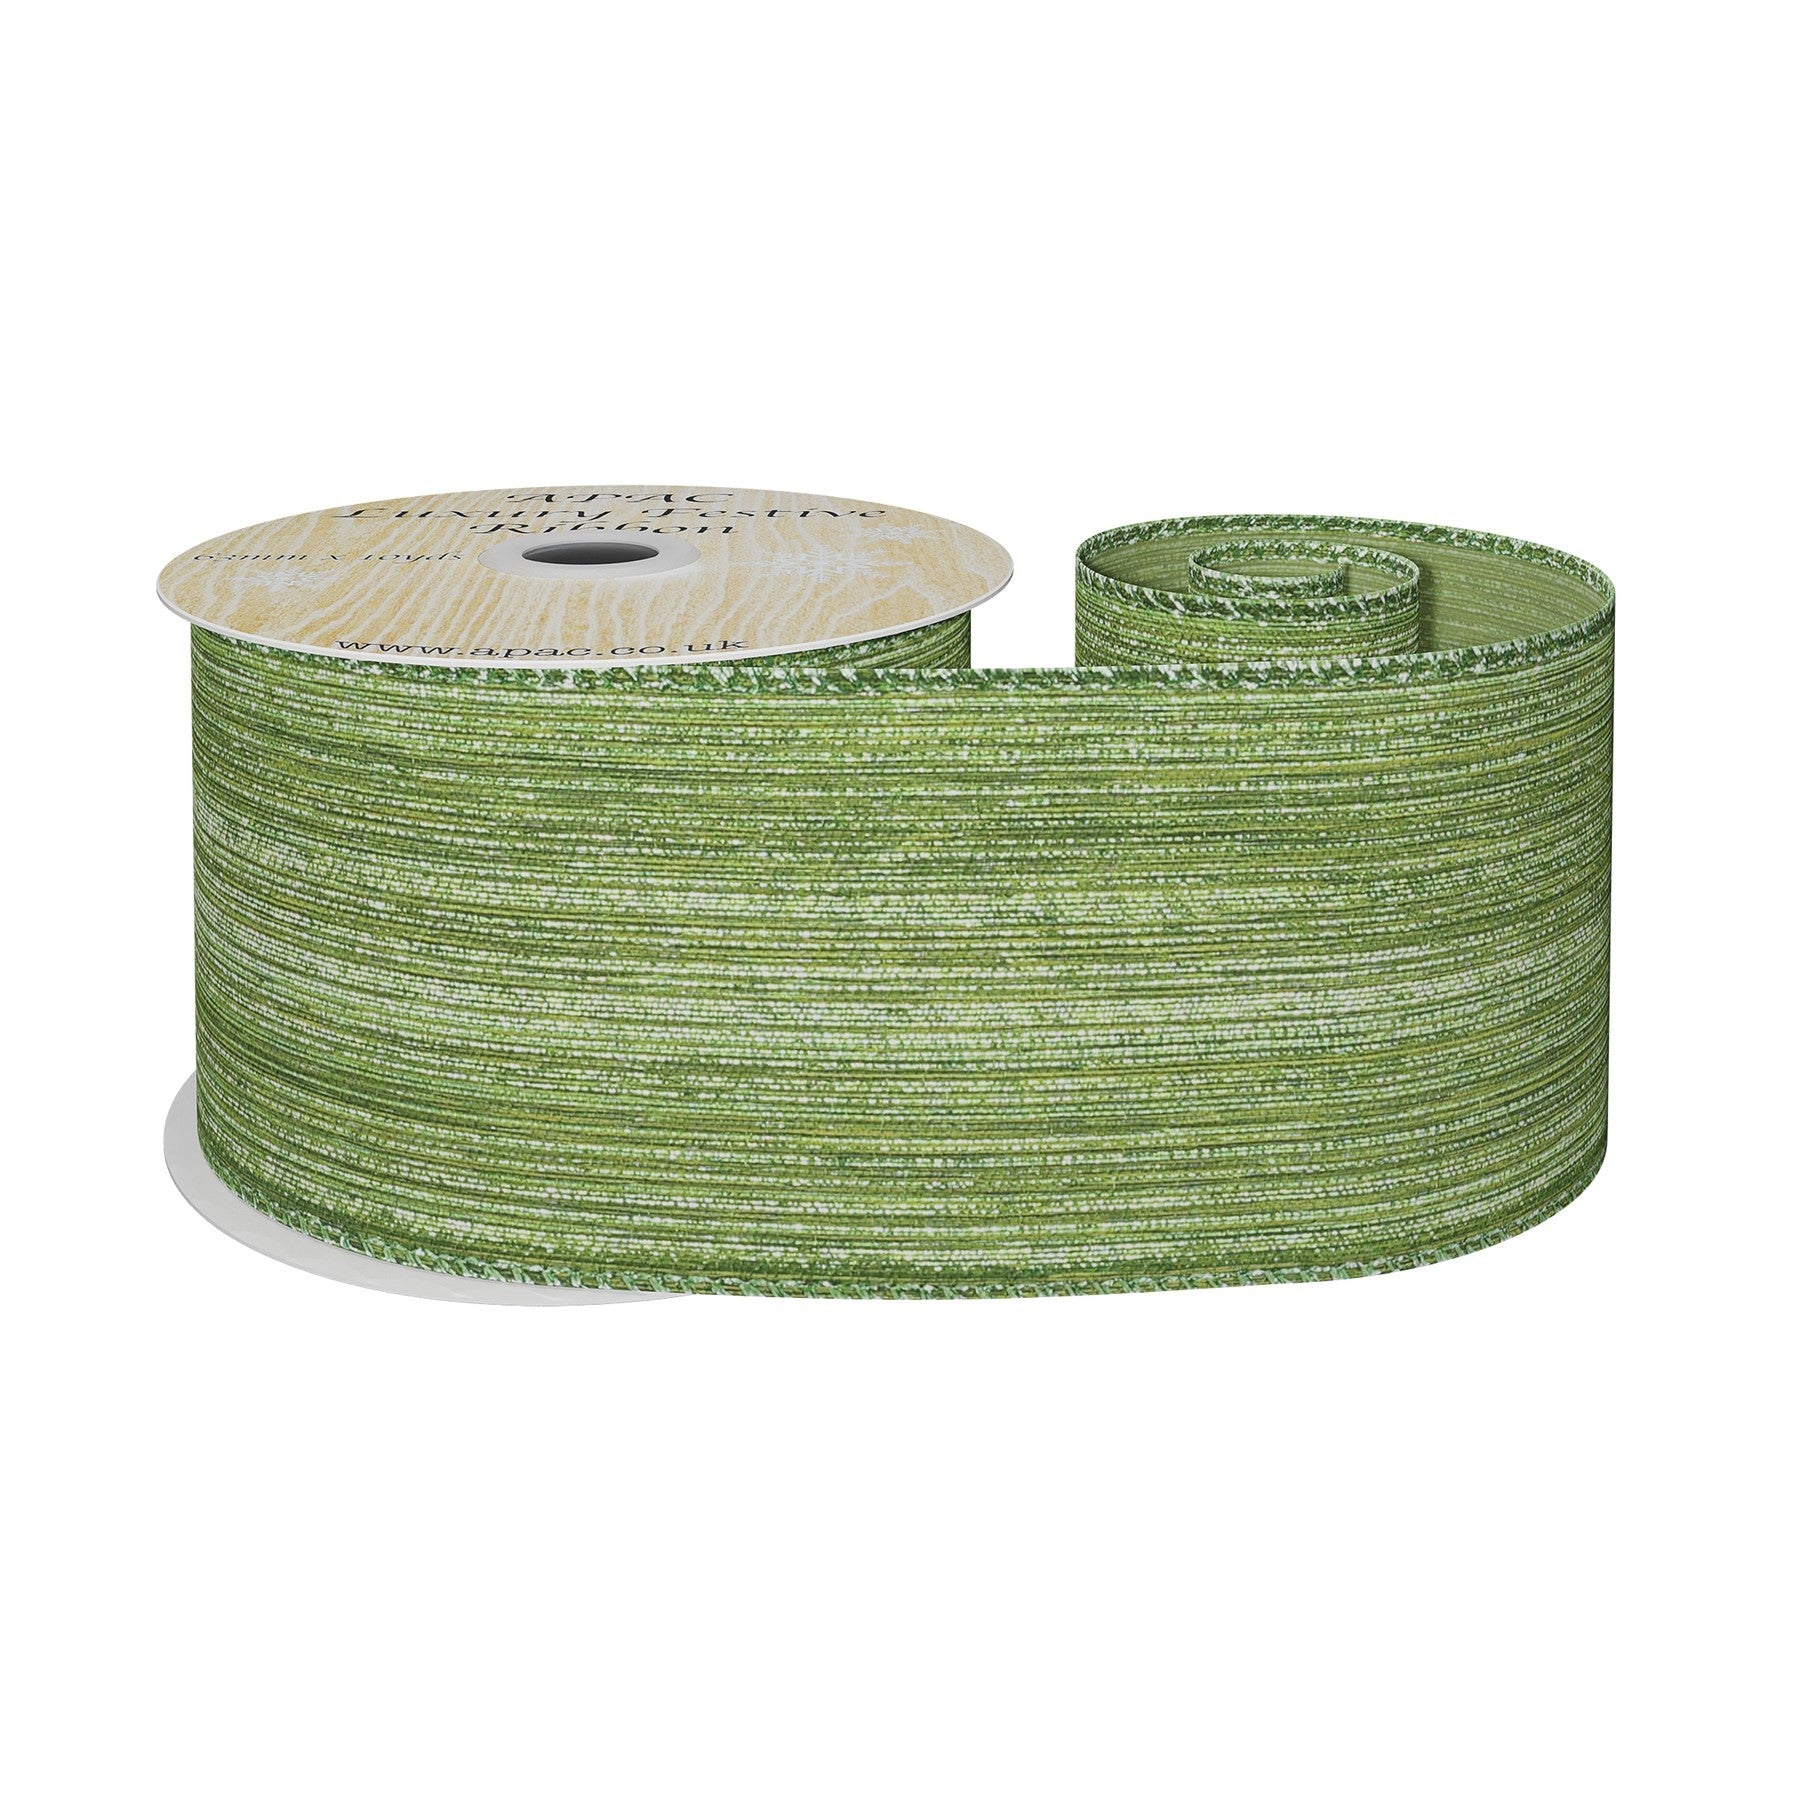 View Moss Green Shimmer Thread Ribbon 63mm x 10yds information